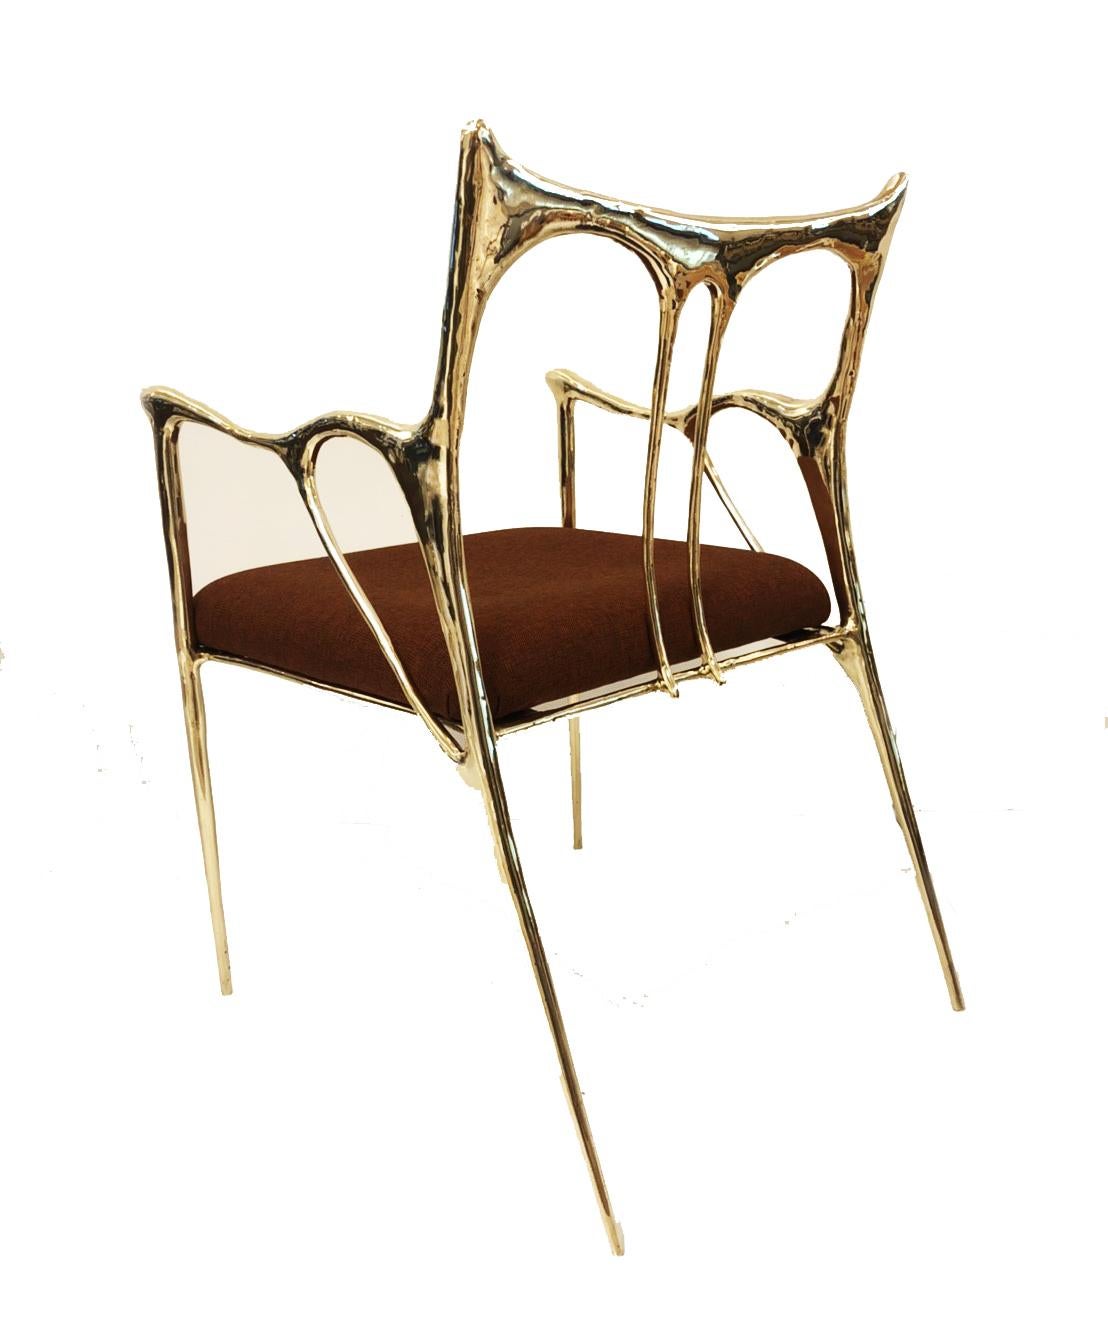 Brass sculpted brass chair, Misaya.
Dimensions: W 54 x L 58 x H 79 cm (seating: 63).
Hand-sculpted chair in brass.